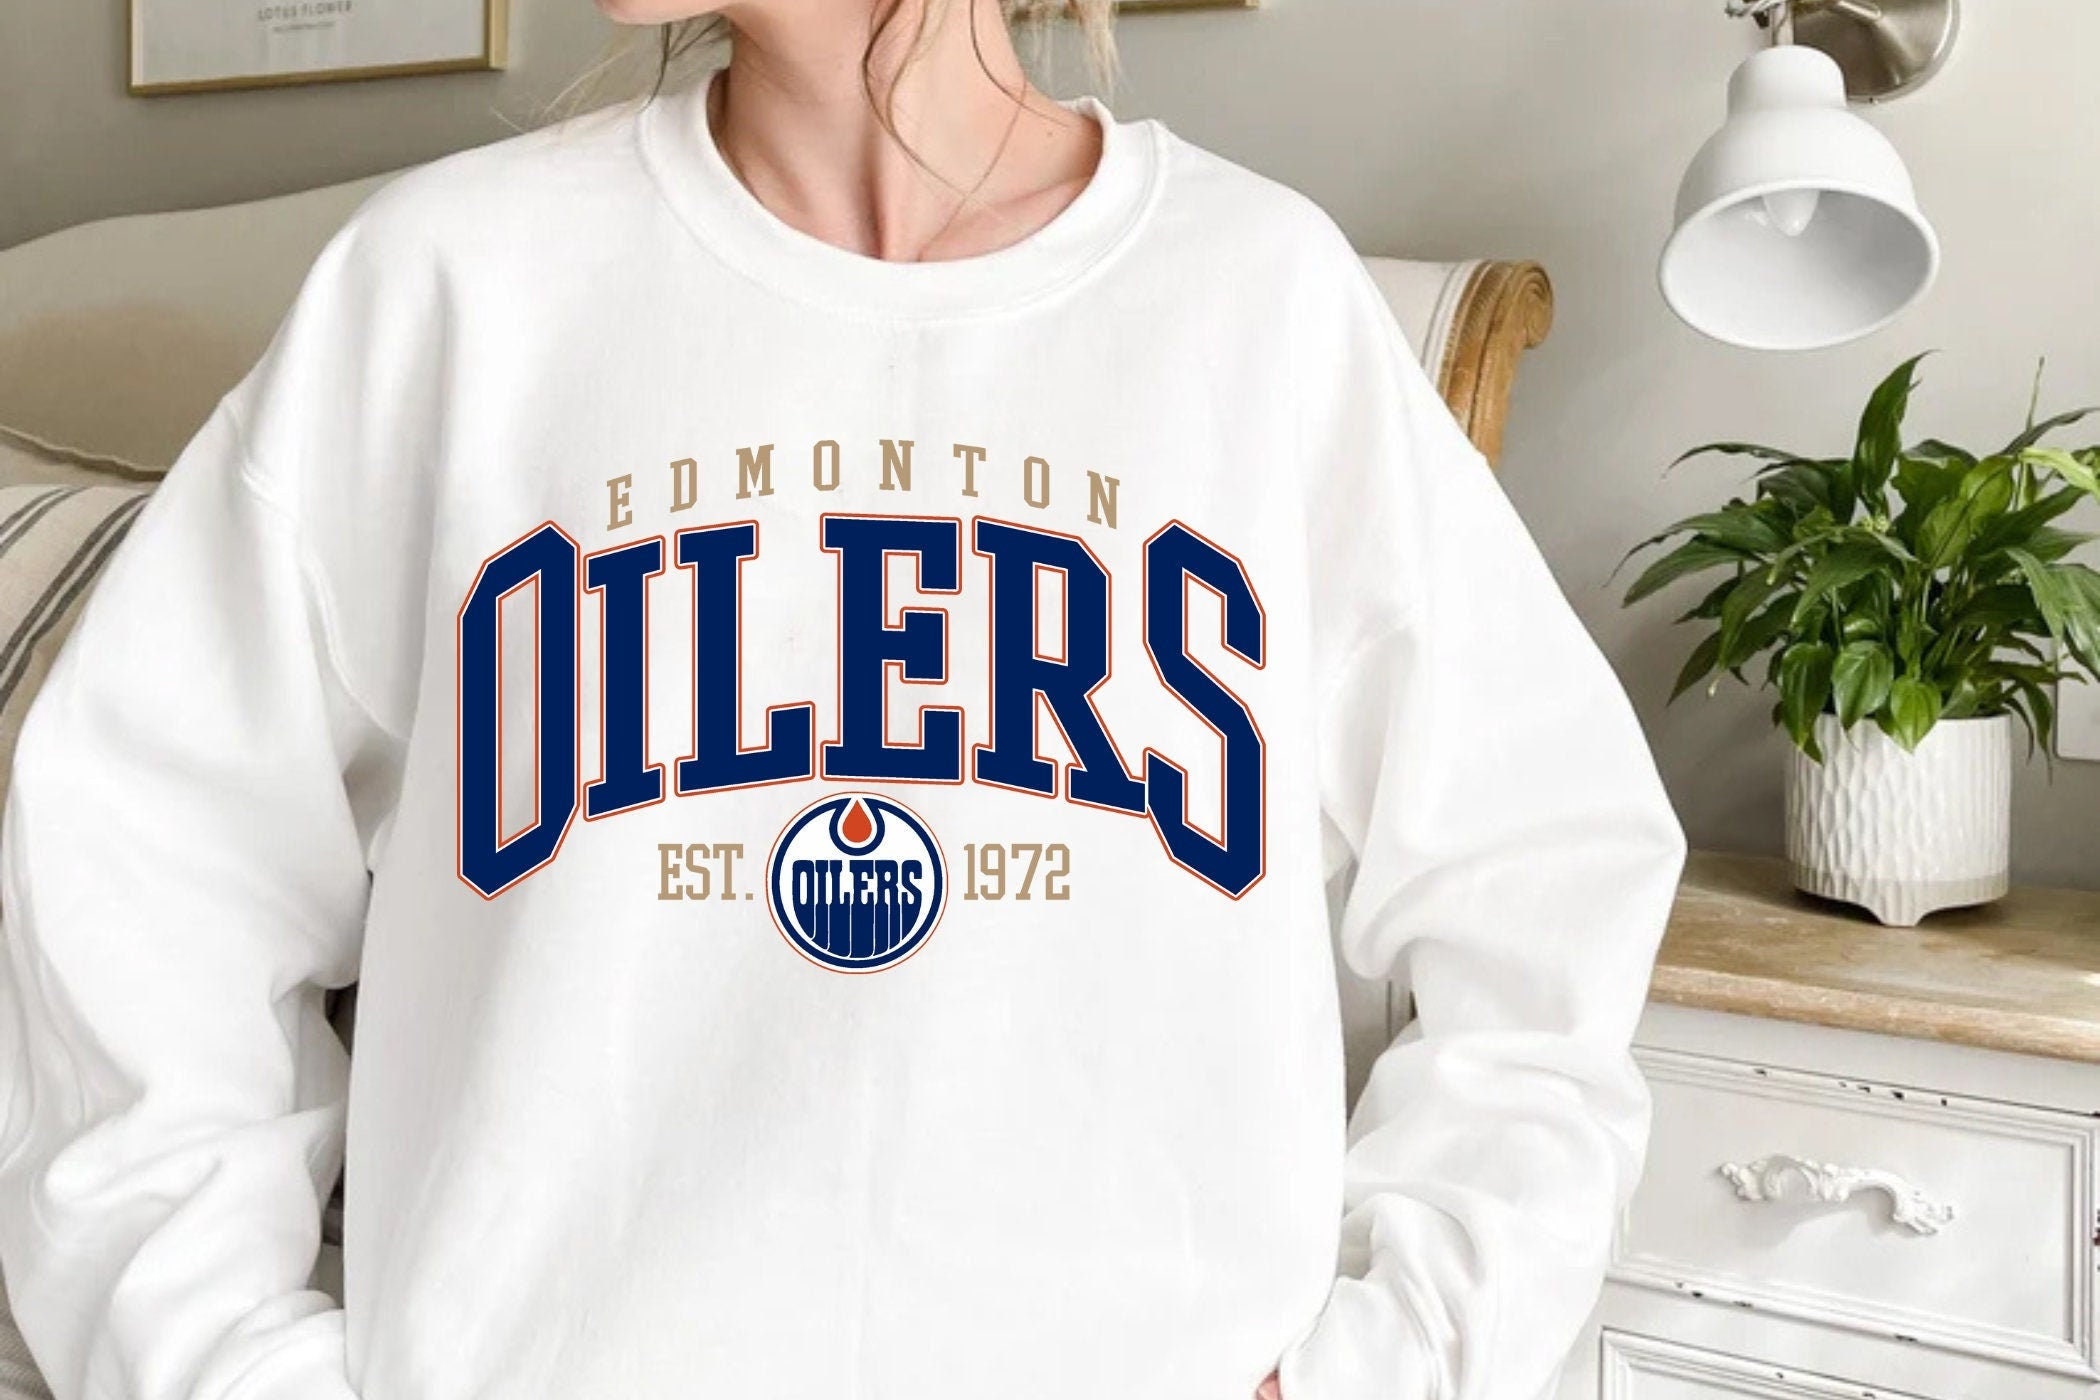 Edmonton Oilers Kids T-Shirt